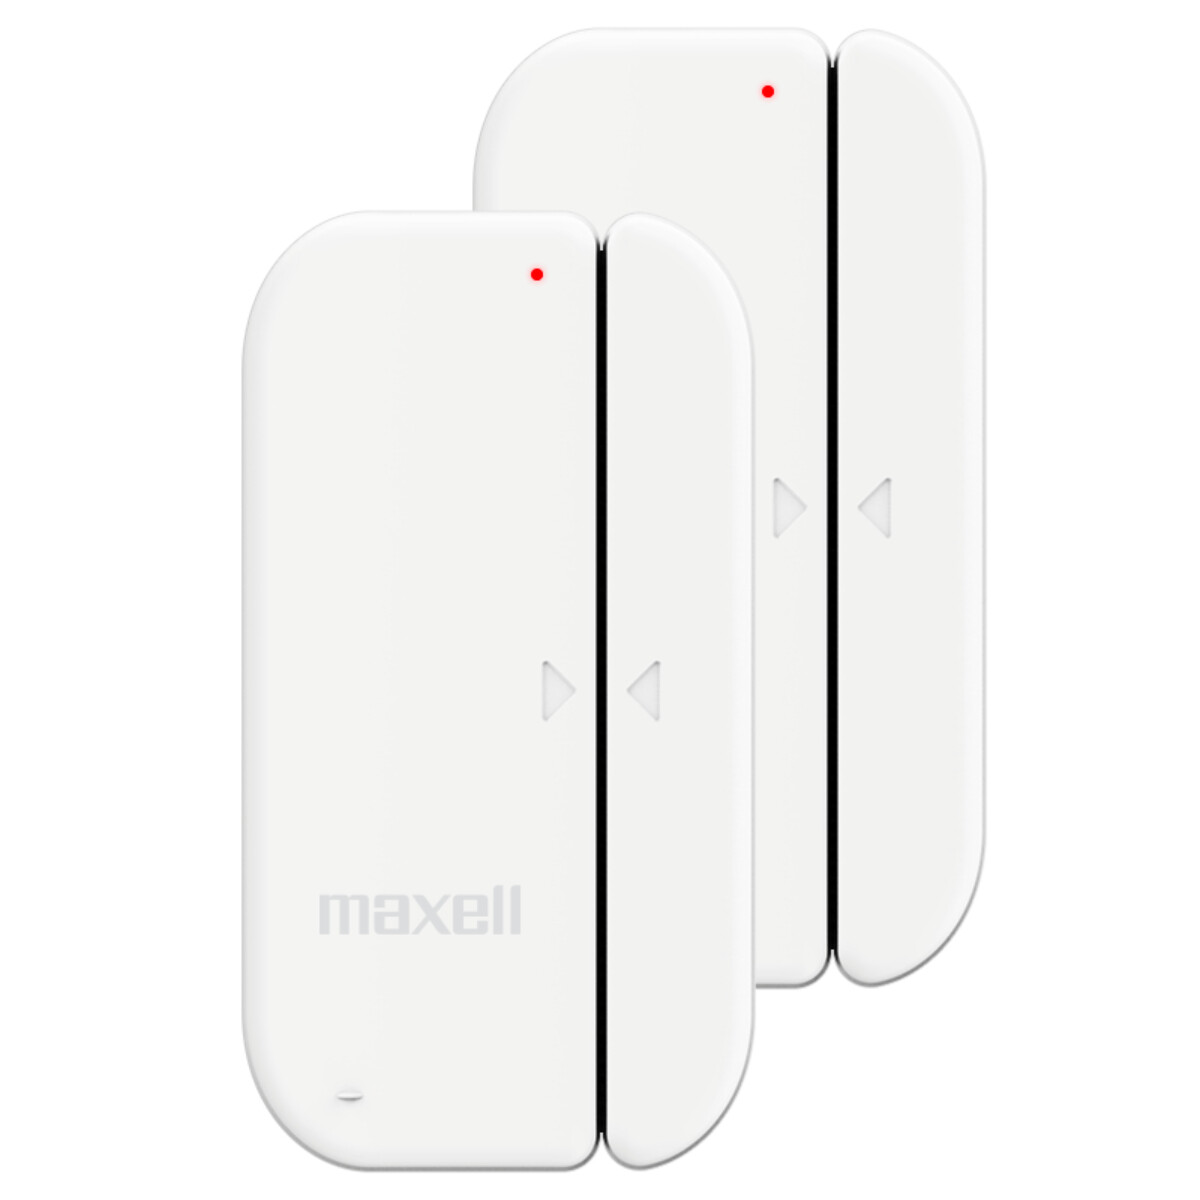 Sensor de puerta/ventana inteligente maxell (pack x2) - Blanco 